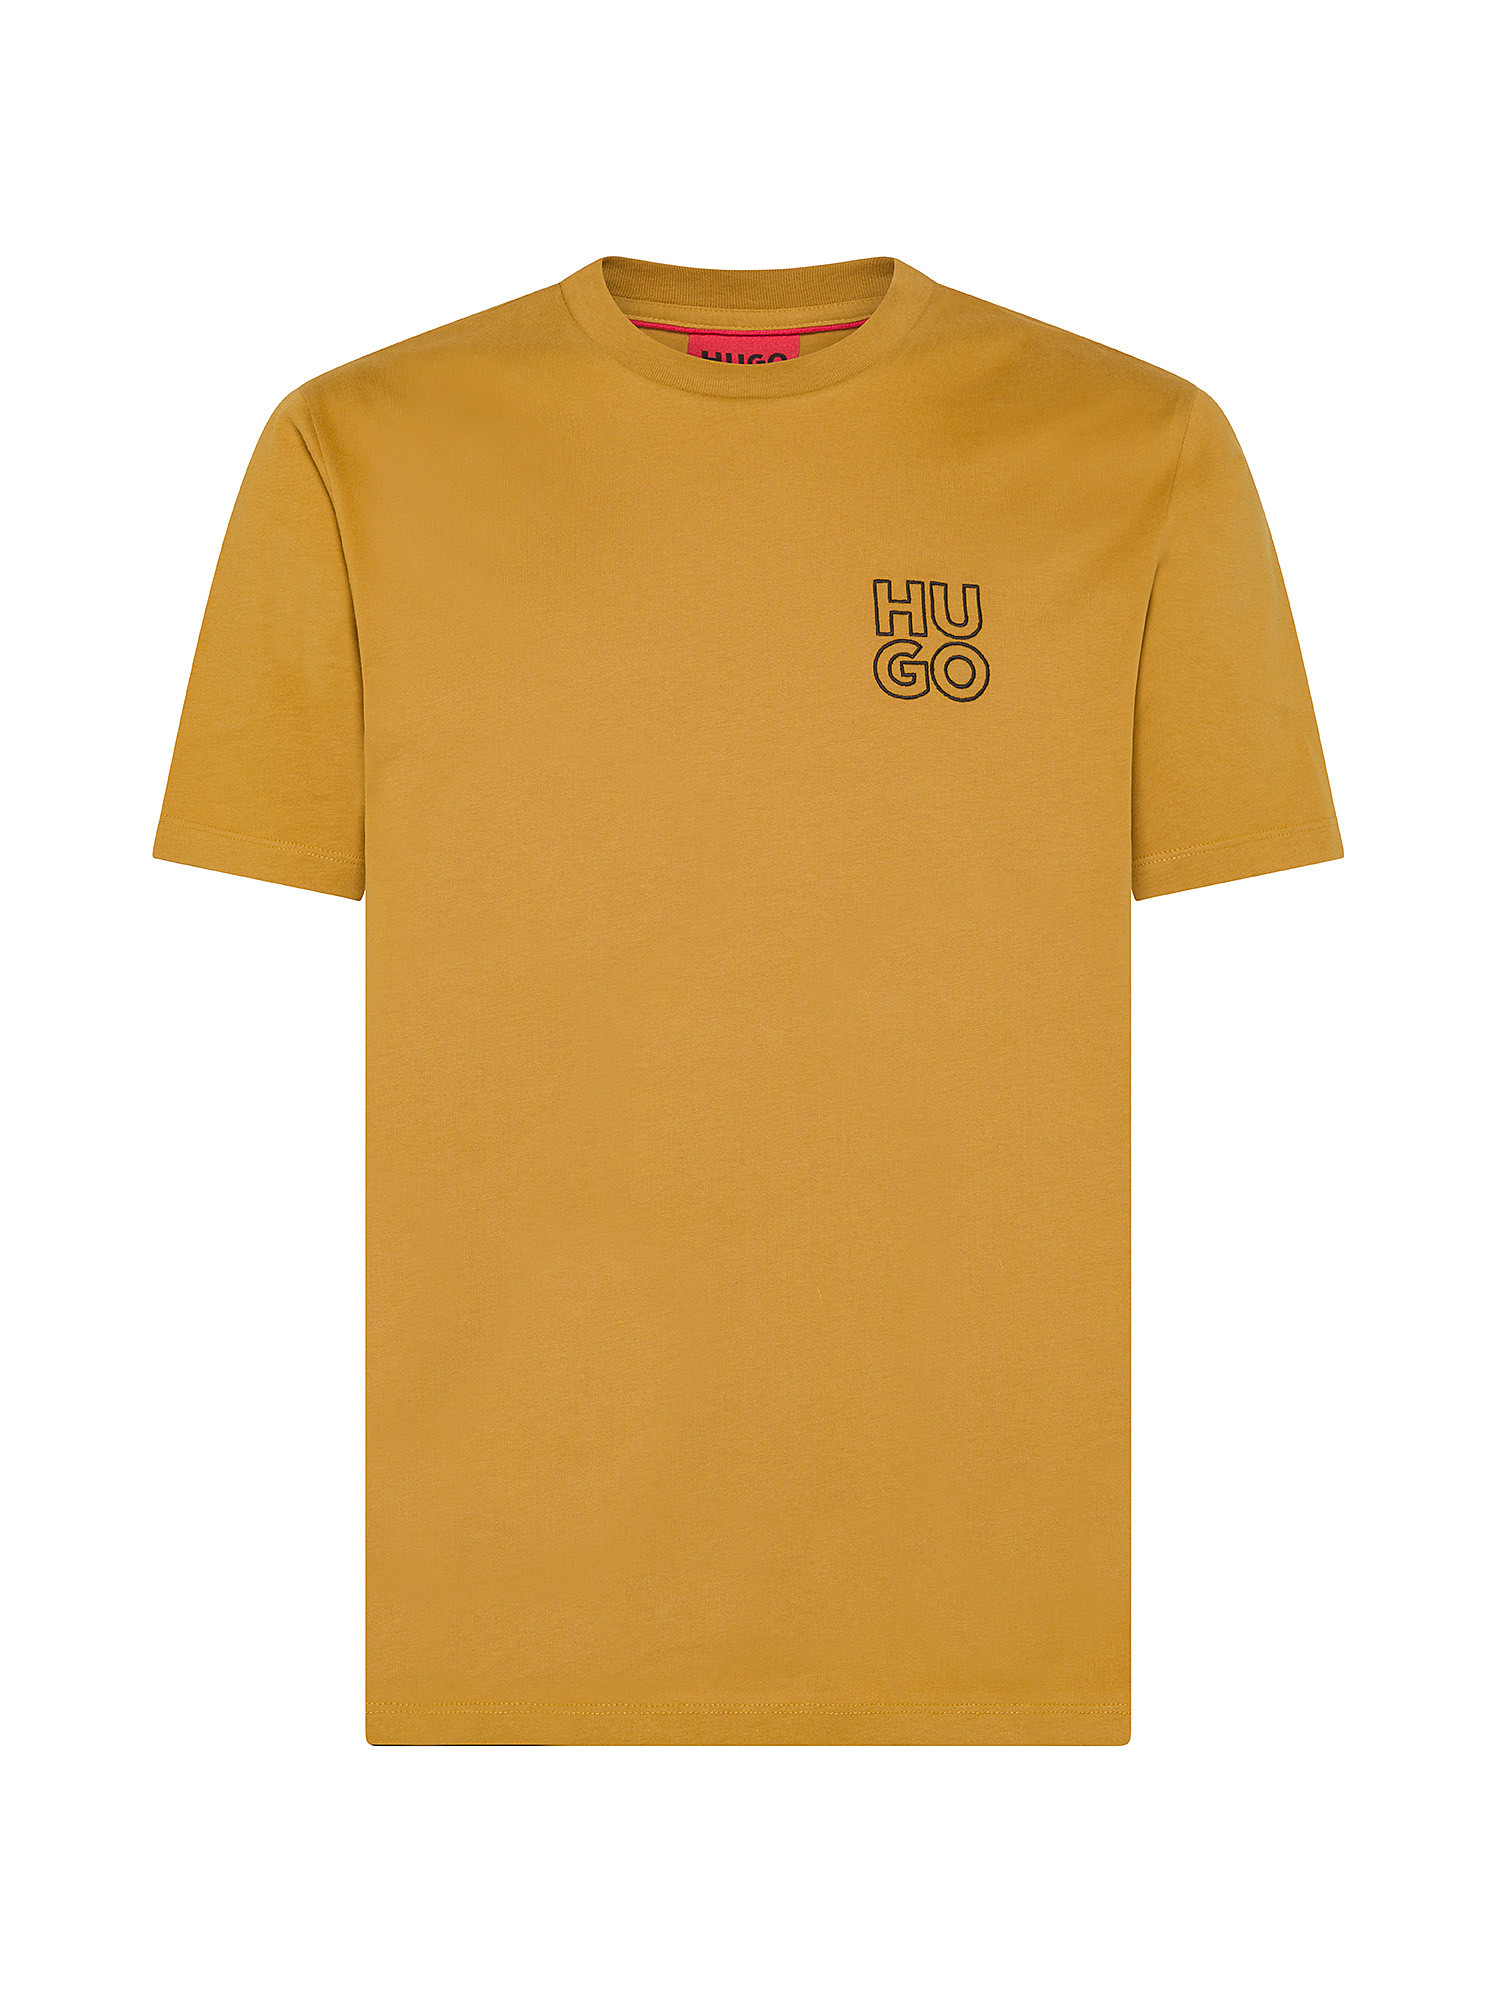 Hugo - T-shirt con logo ricamato in cotone, Cammello, large image number 0